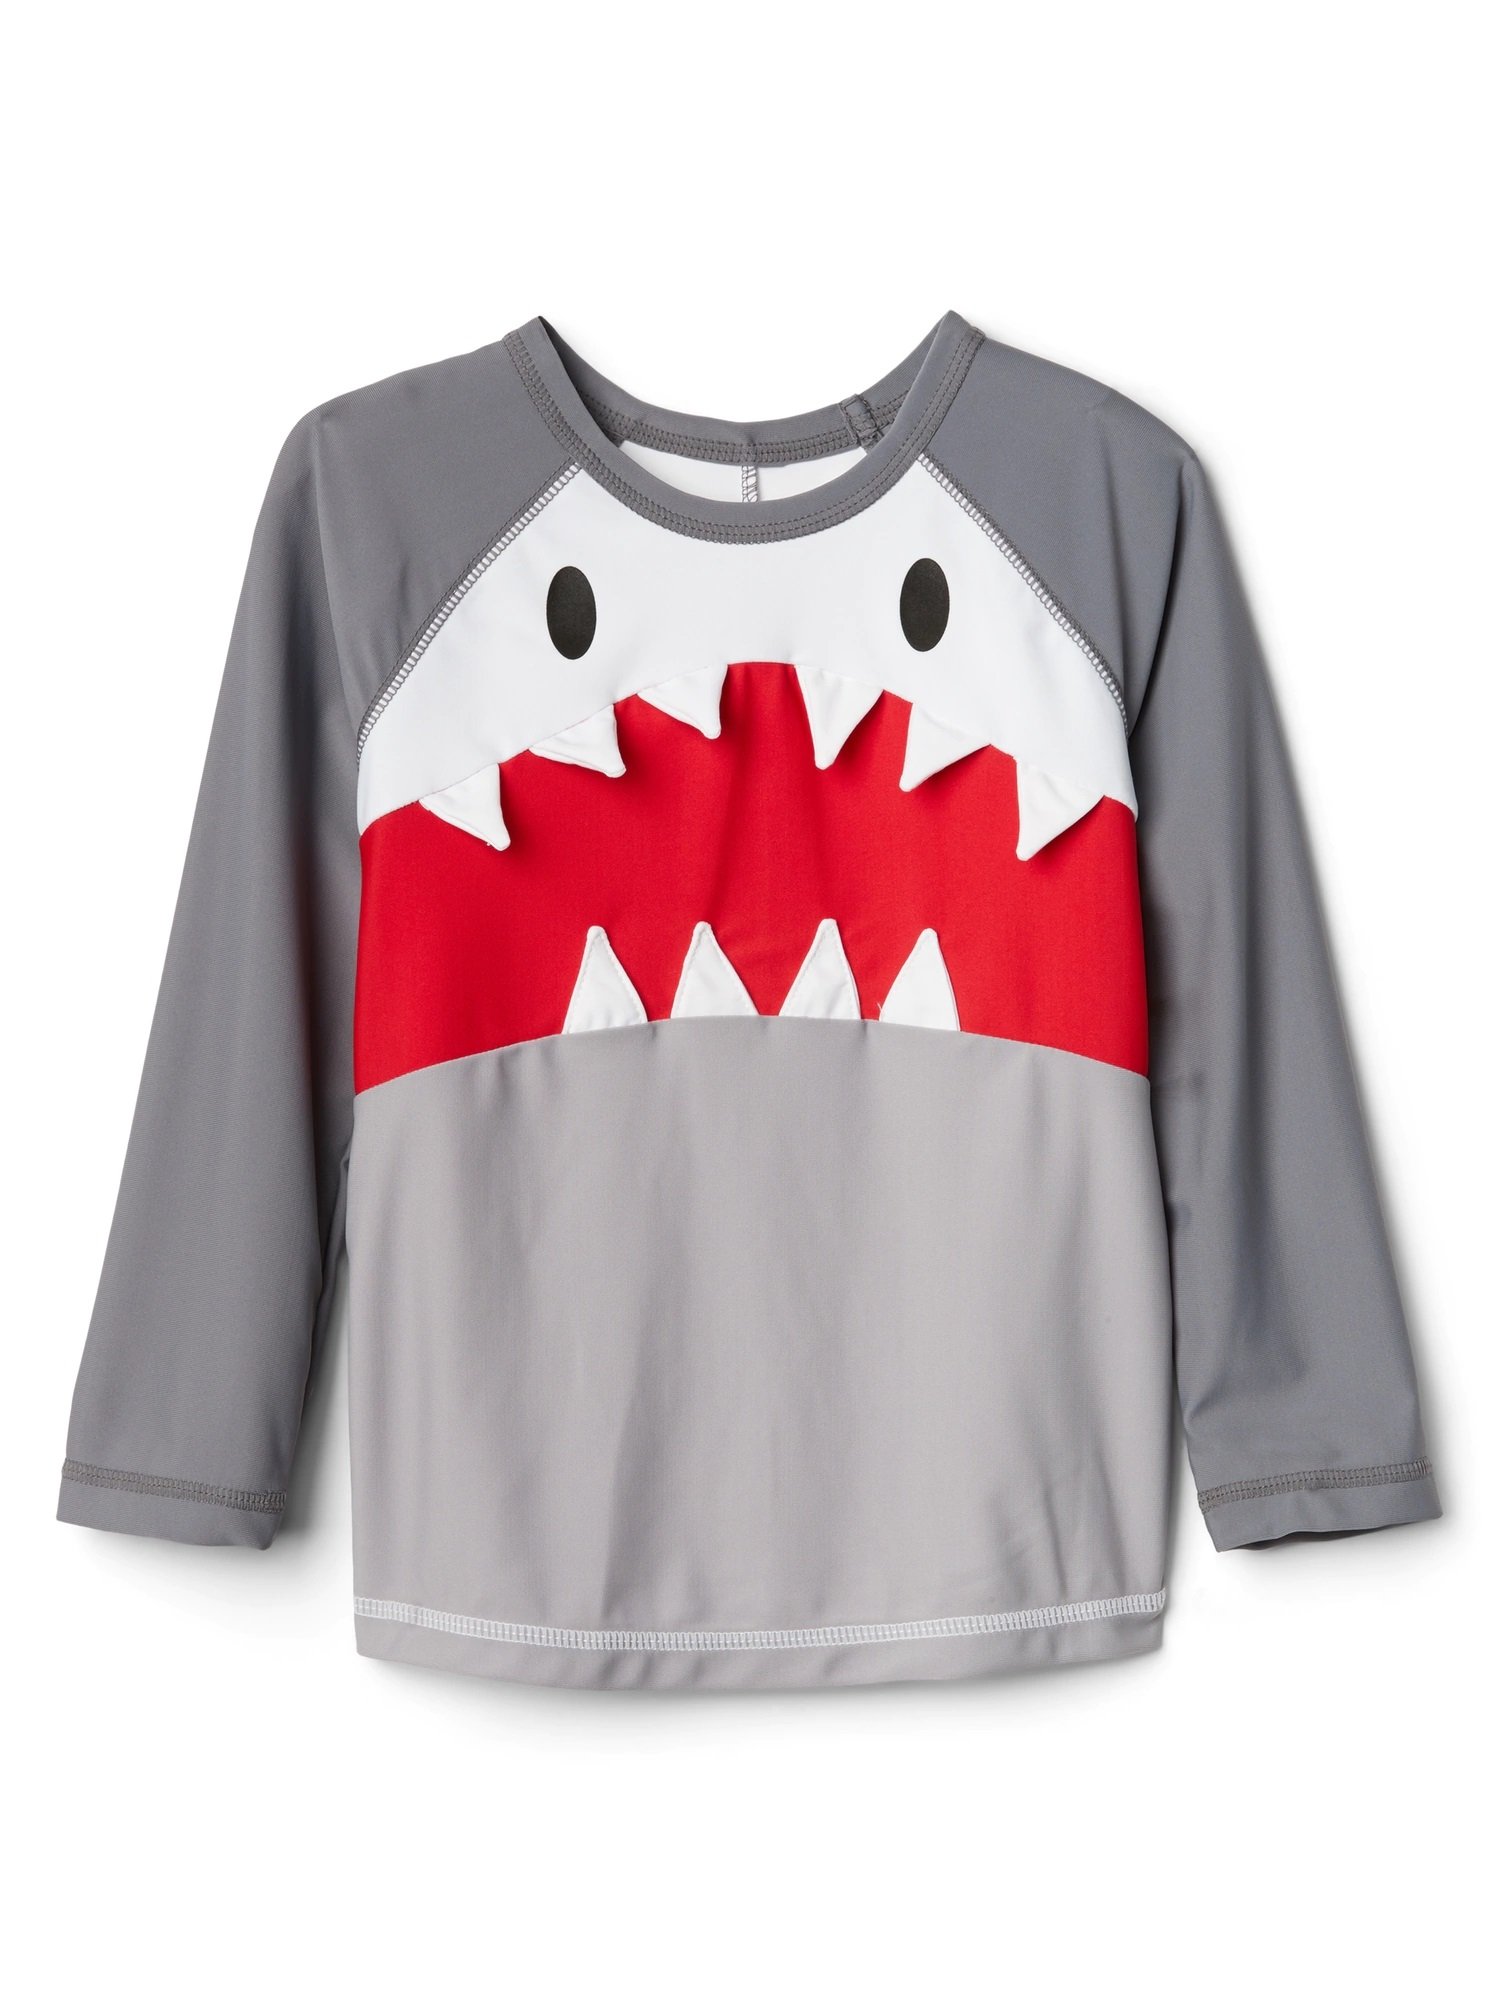 Köpek balığı desenli rashguard mayo t-shirt product image